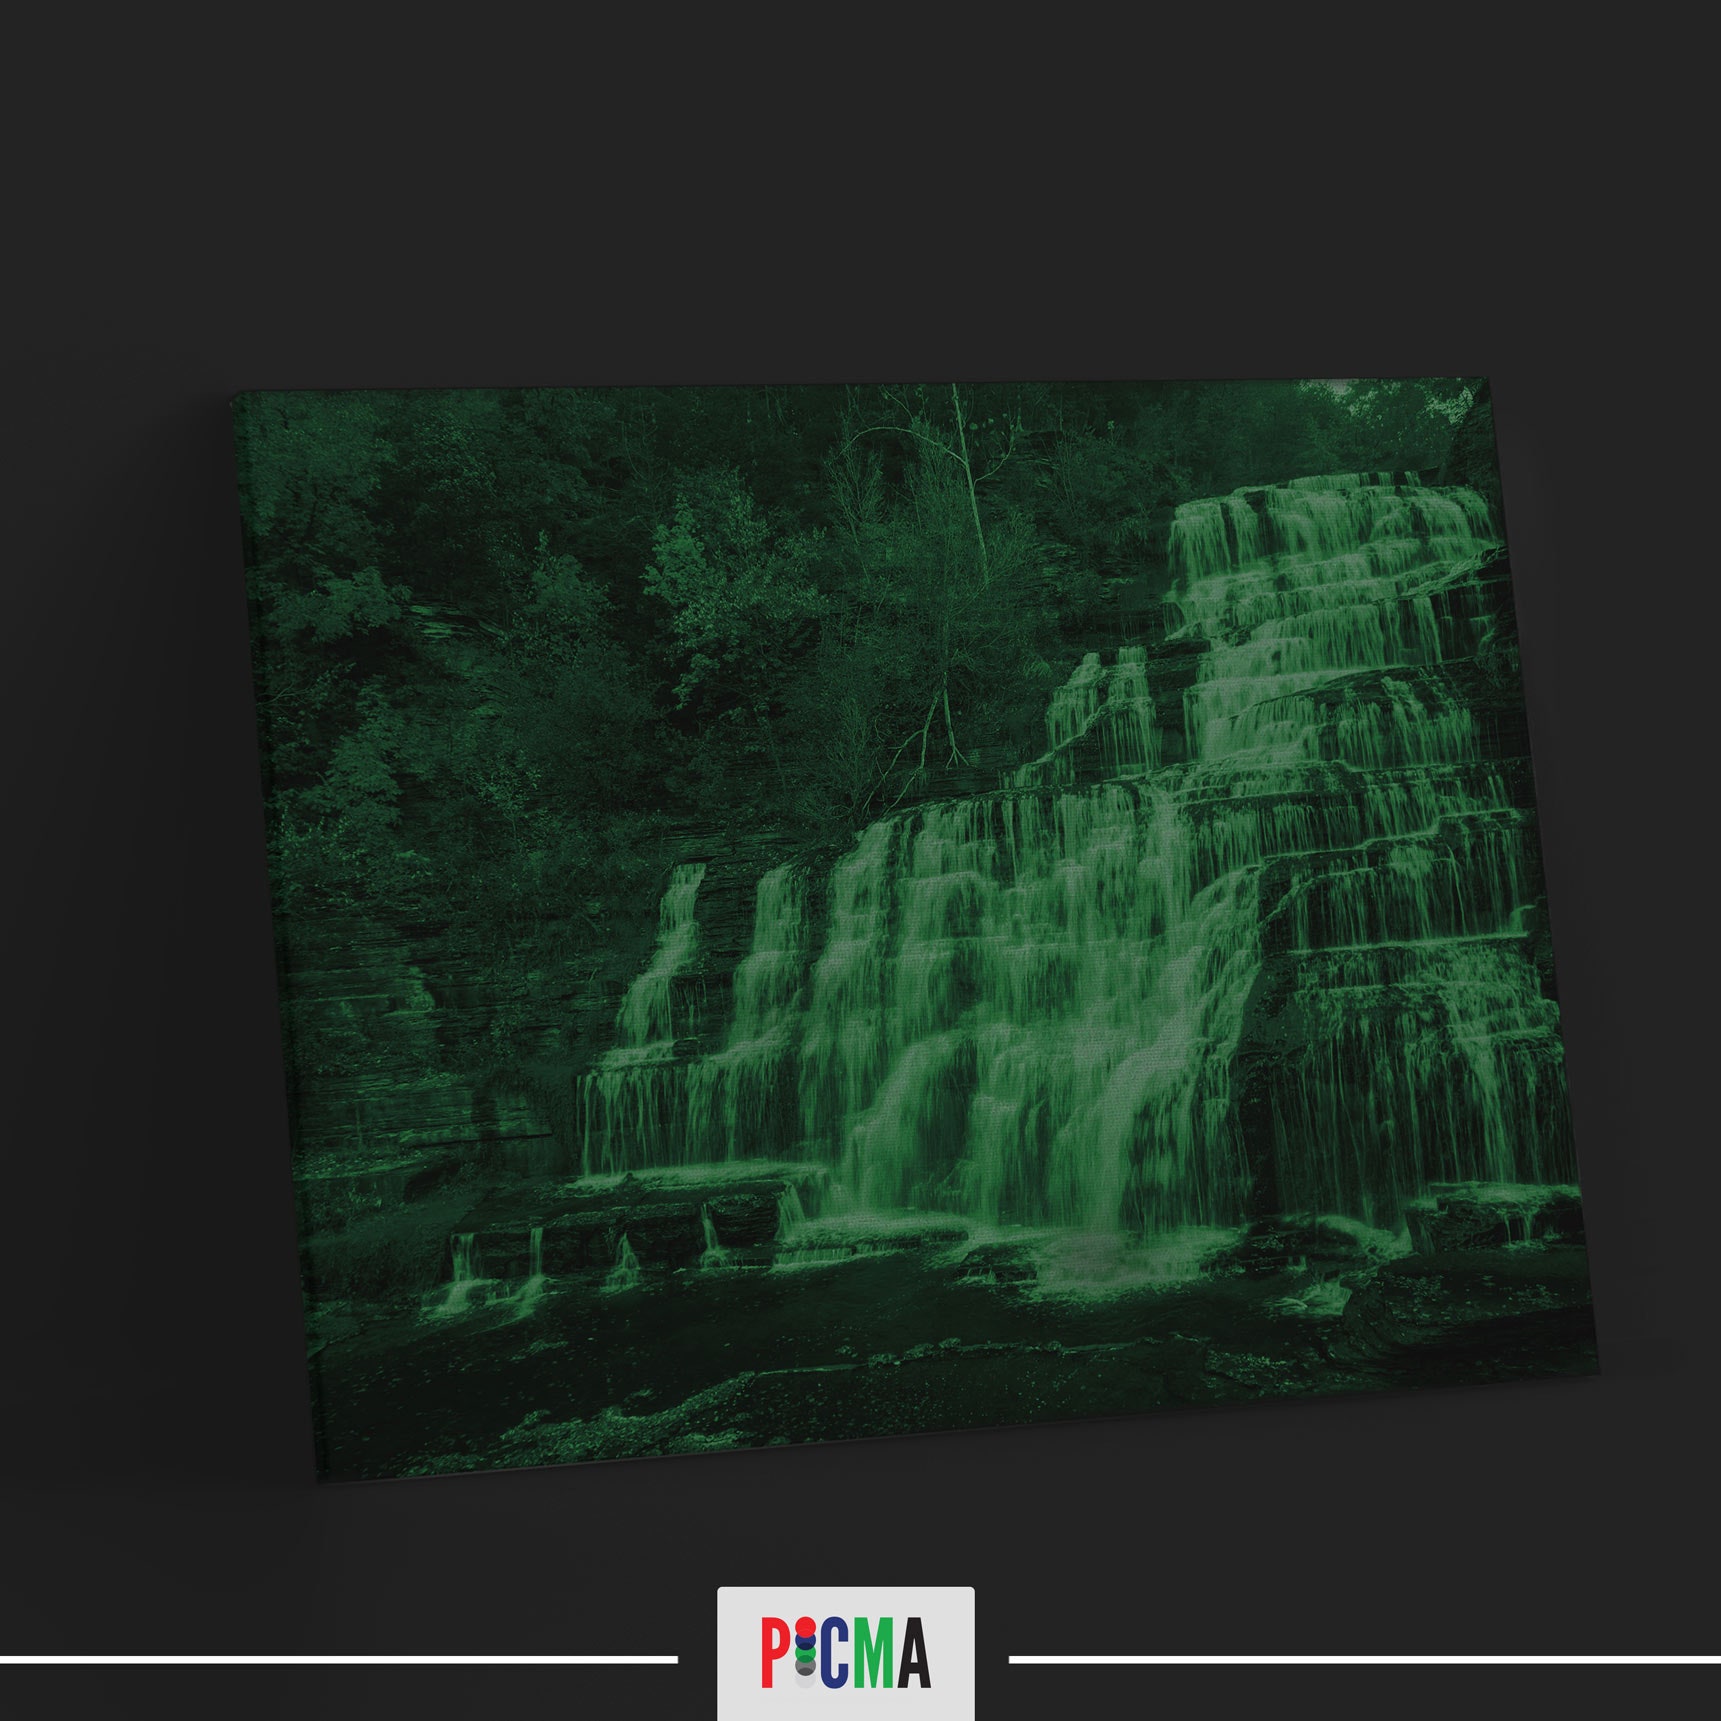 Tablou canvas luminos Cascada 3, Picma, dualview, panza + sasiu lemn, 60 x 90 cm